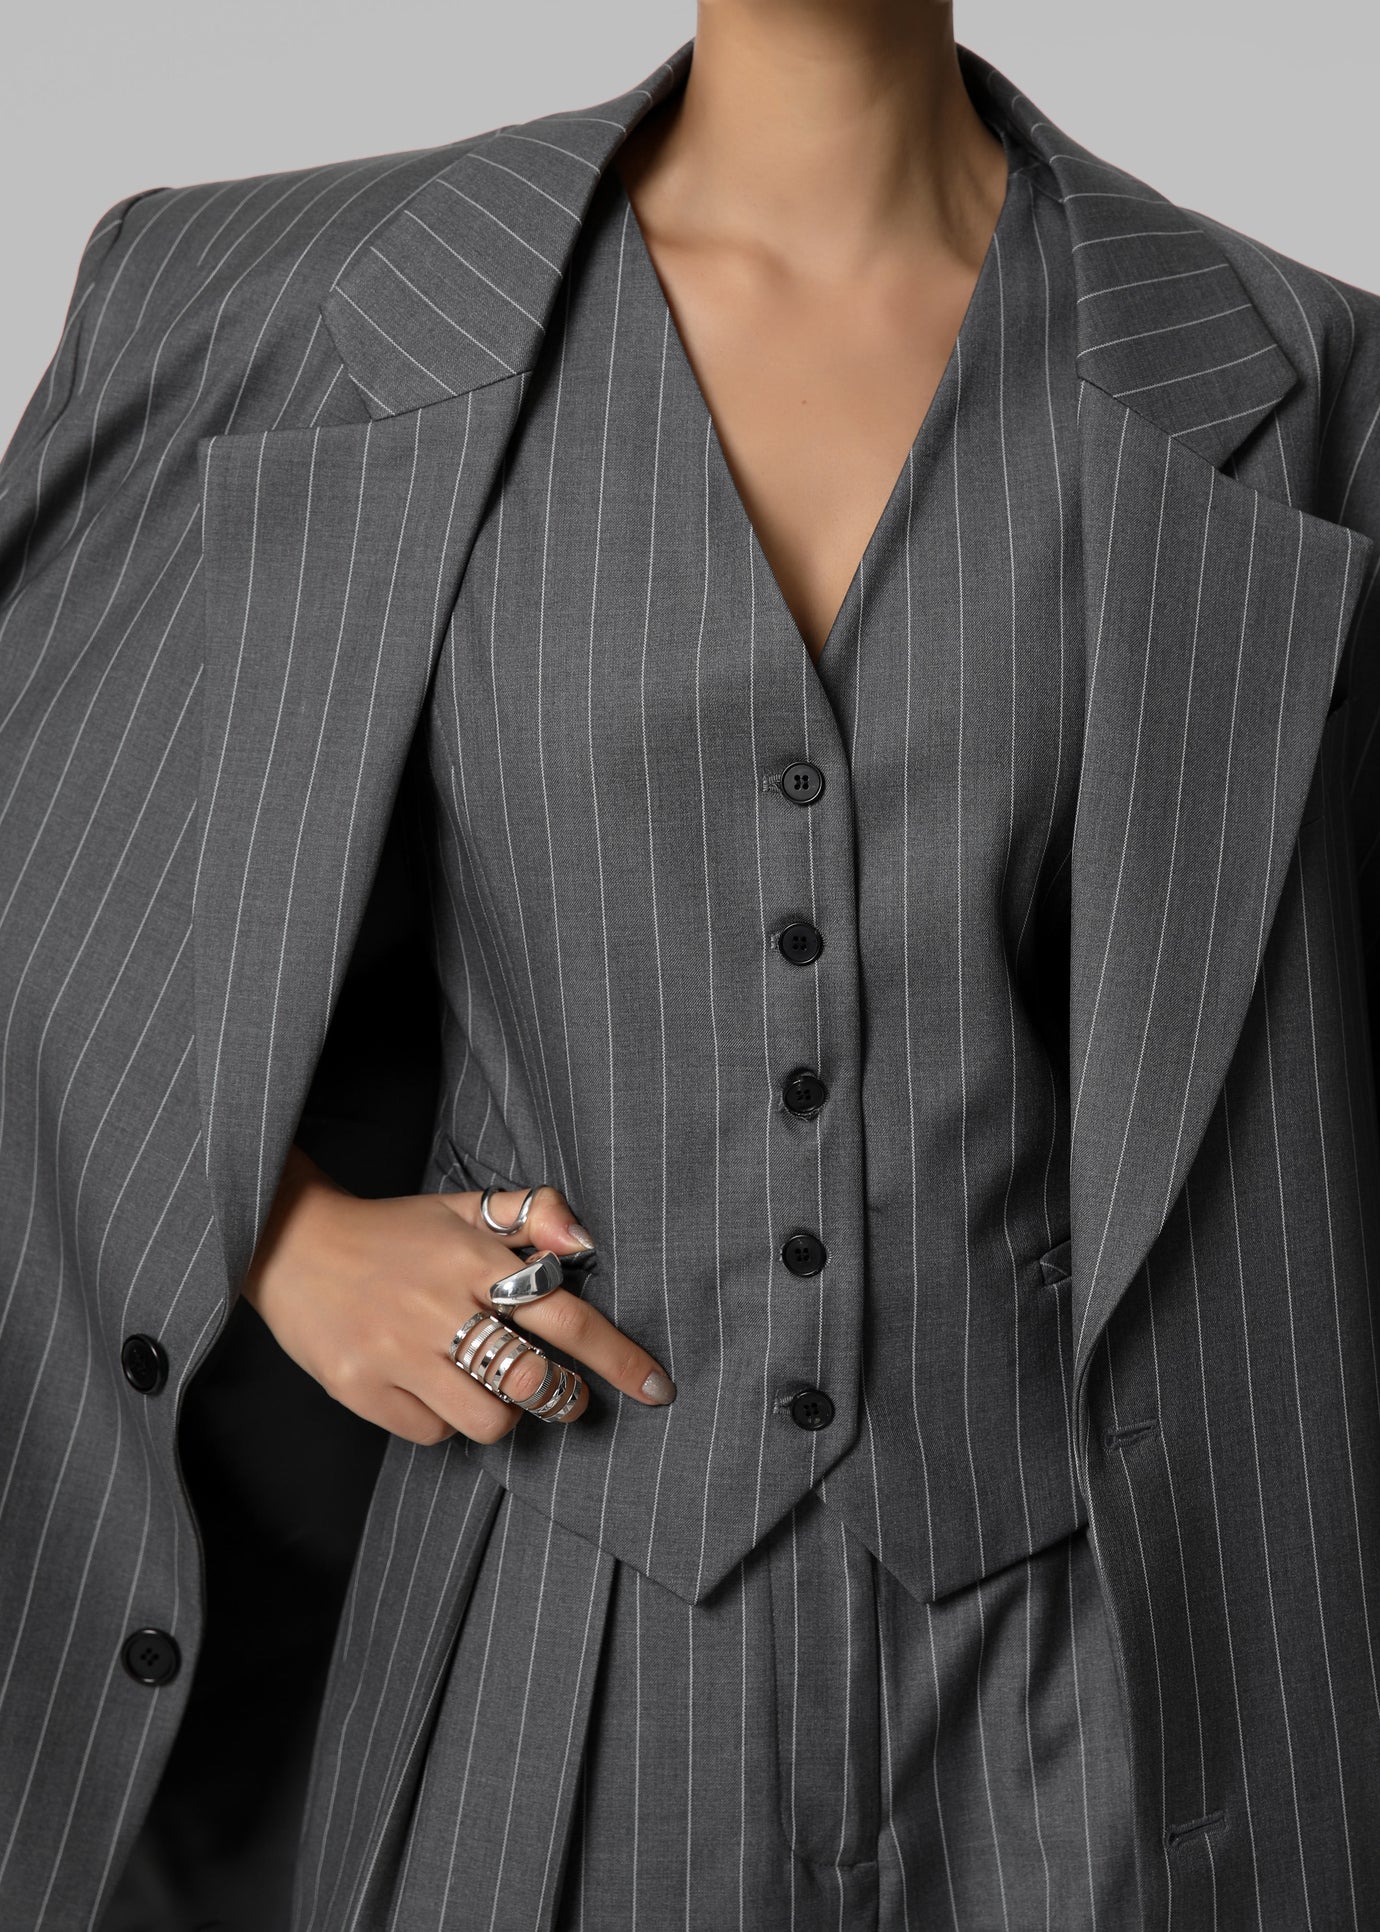 Holland Suit Vest - Charcoal/White Pinstripe